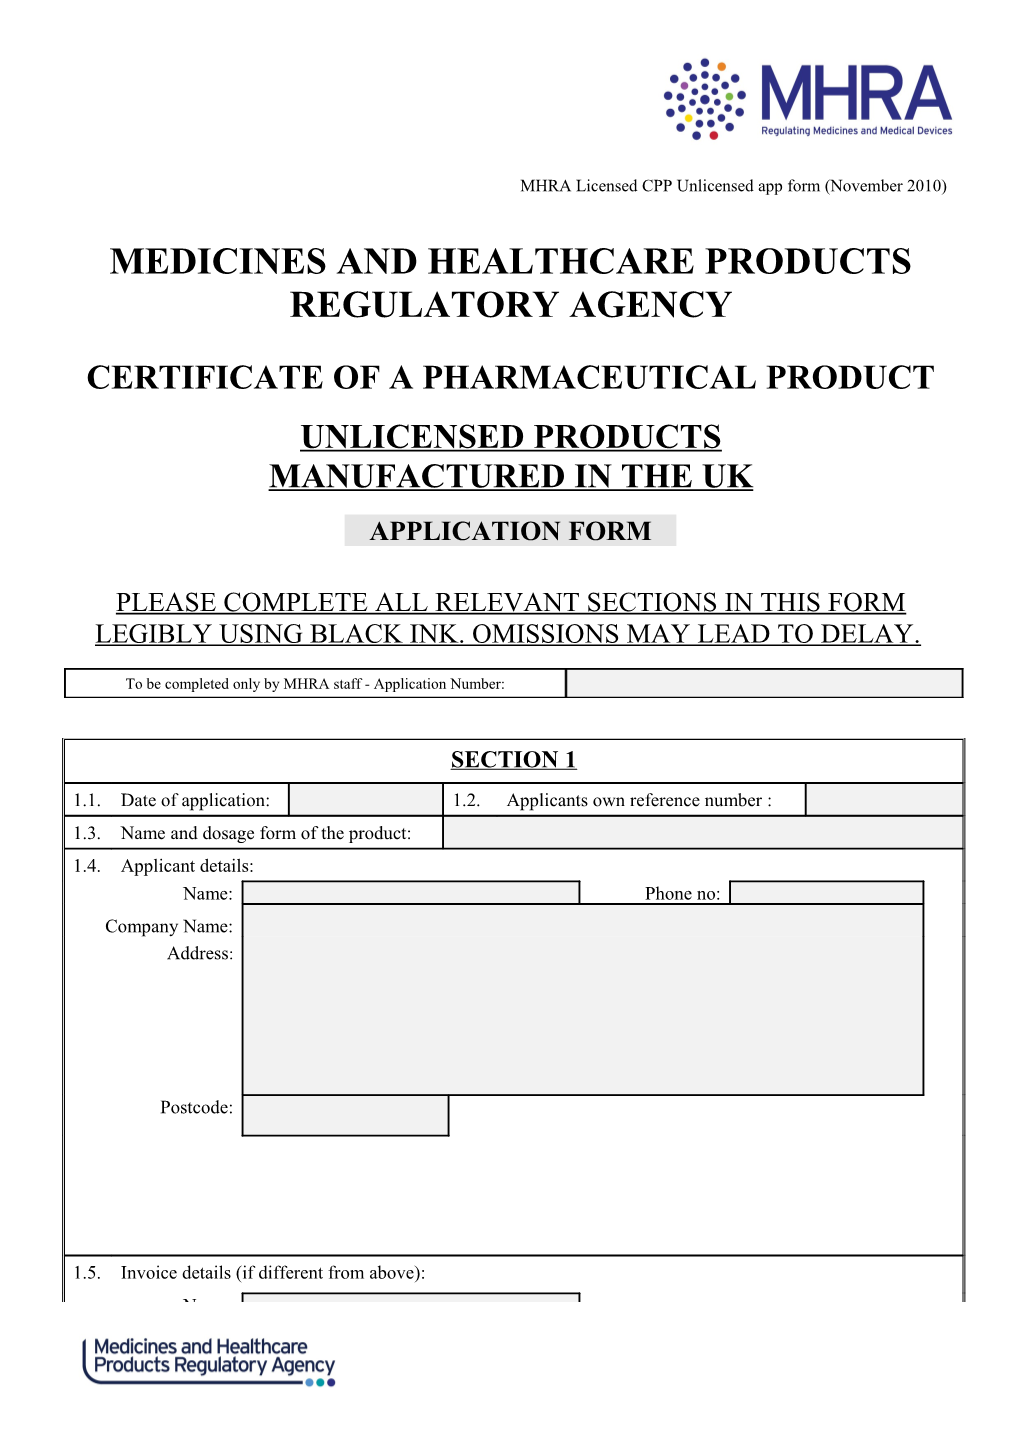 Medicines and Healthcare Products Regulatoryagency